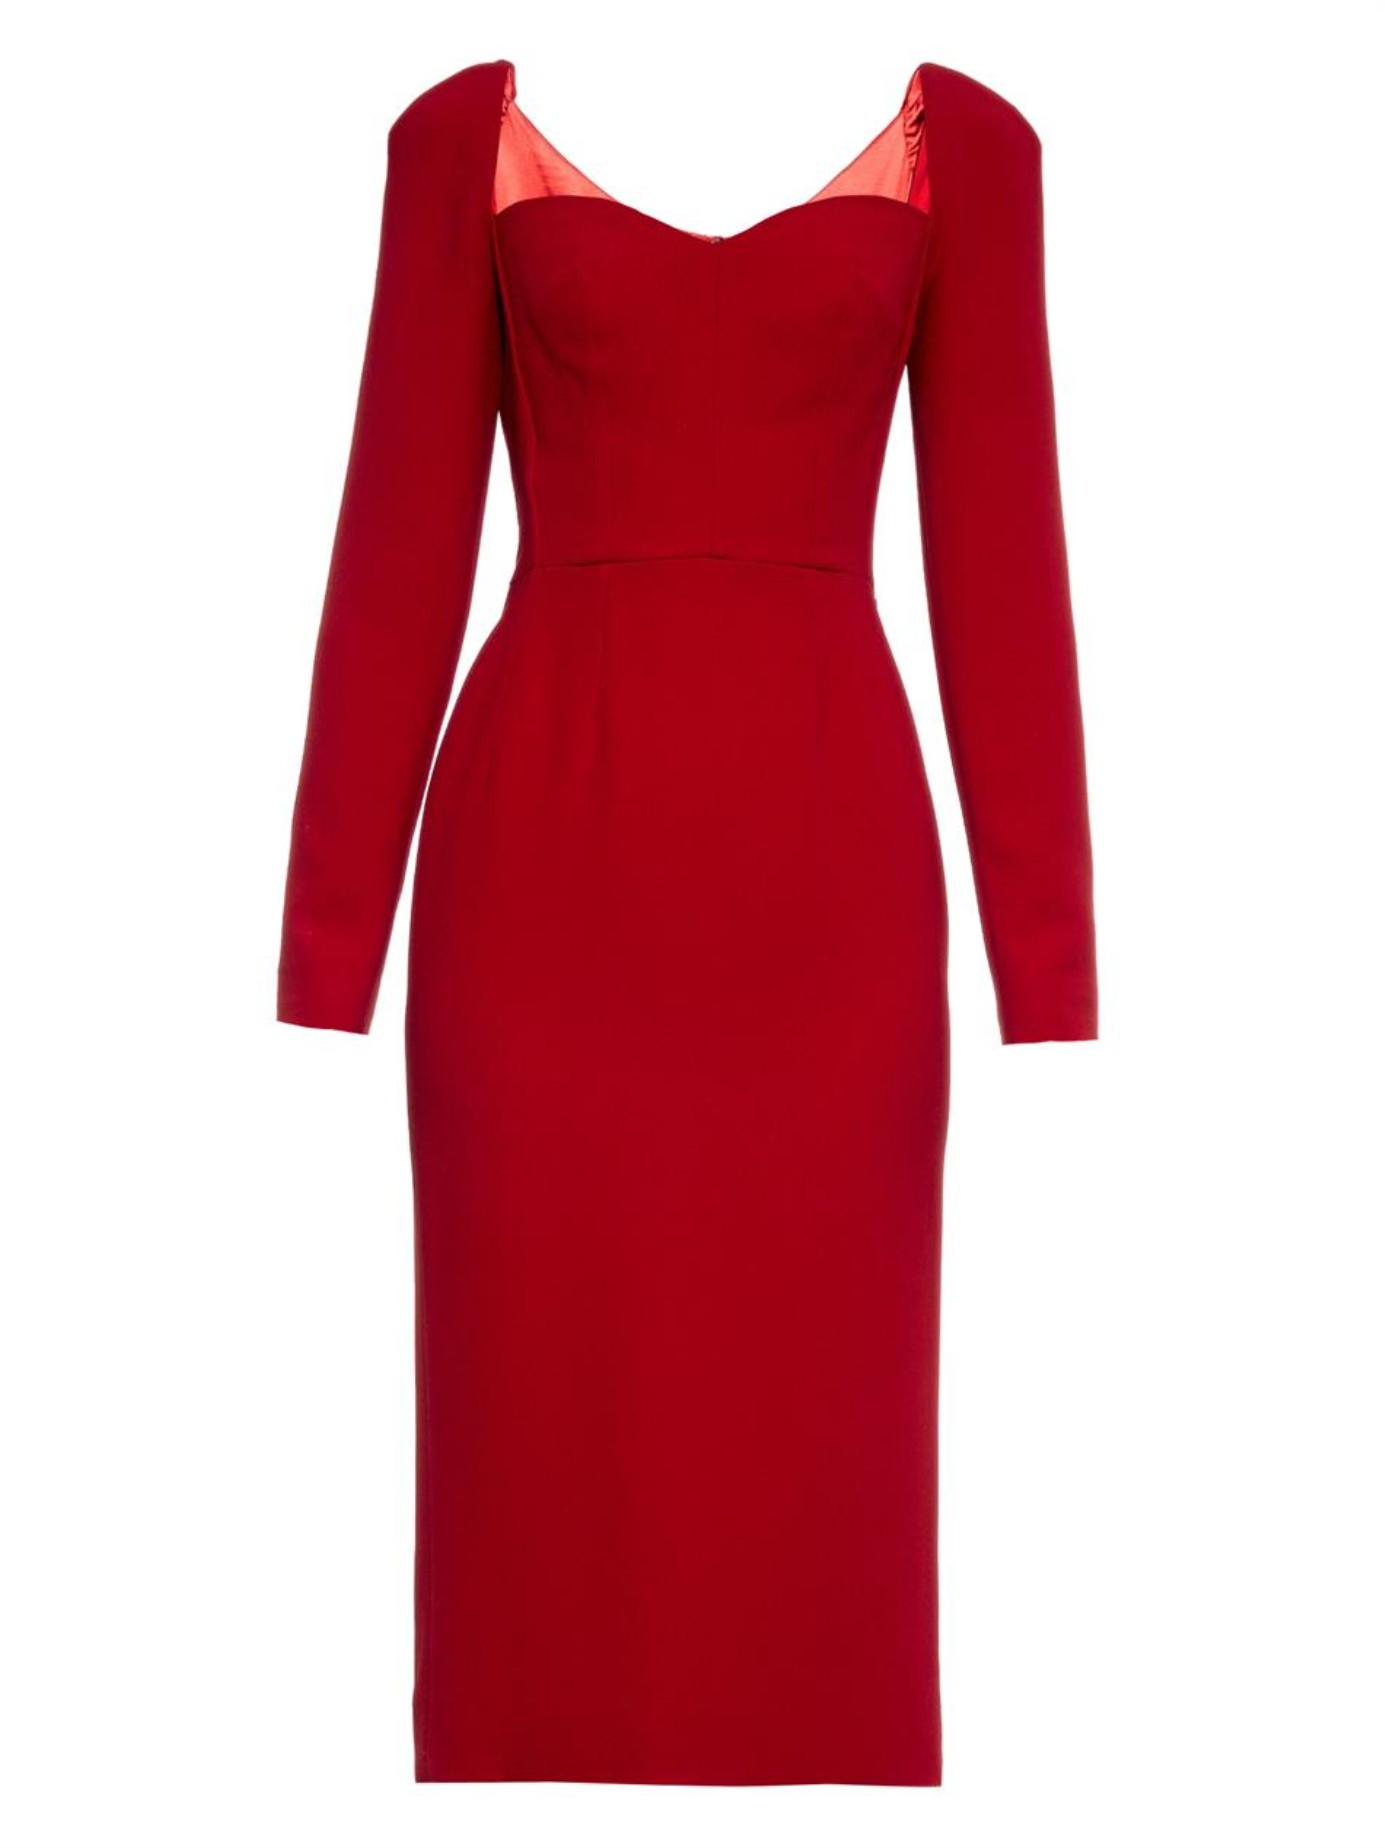 Lyst - Dolce & Gabbana Sweetheart-neckline Cady Dress in Red